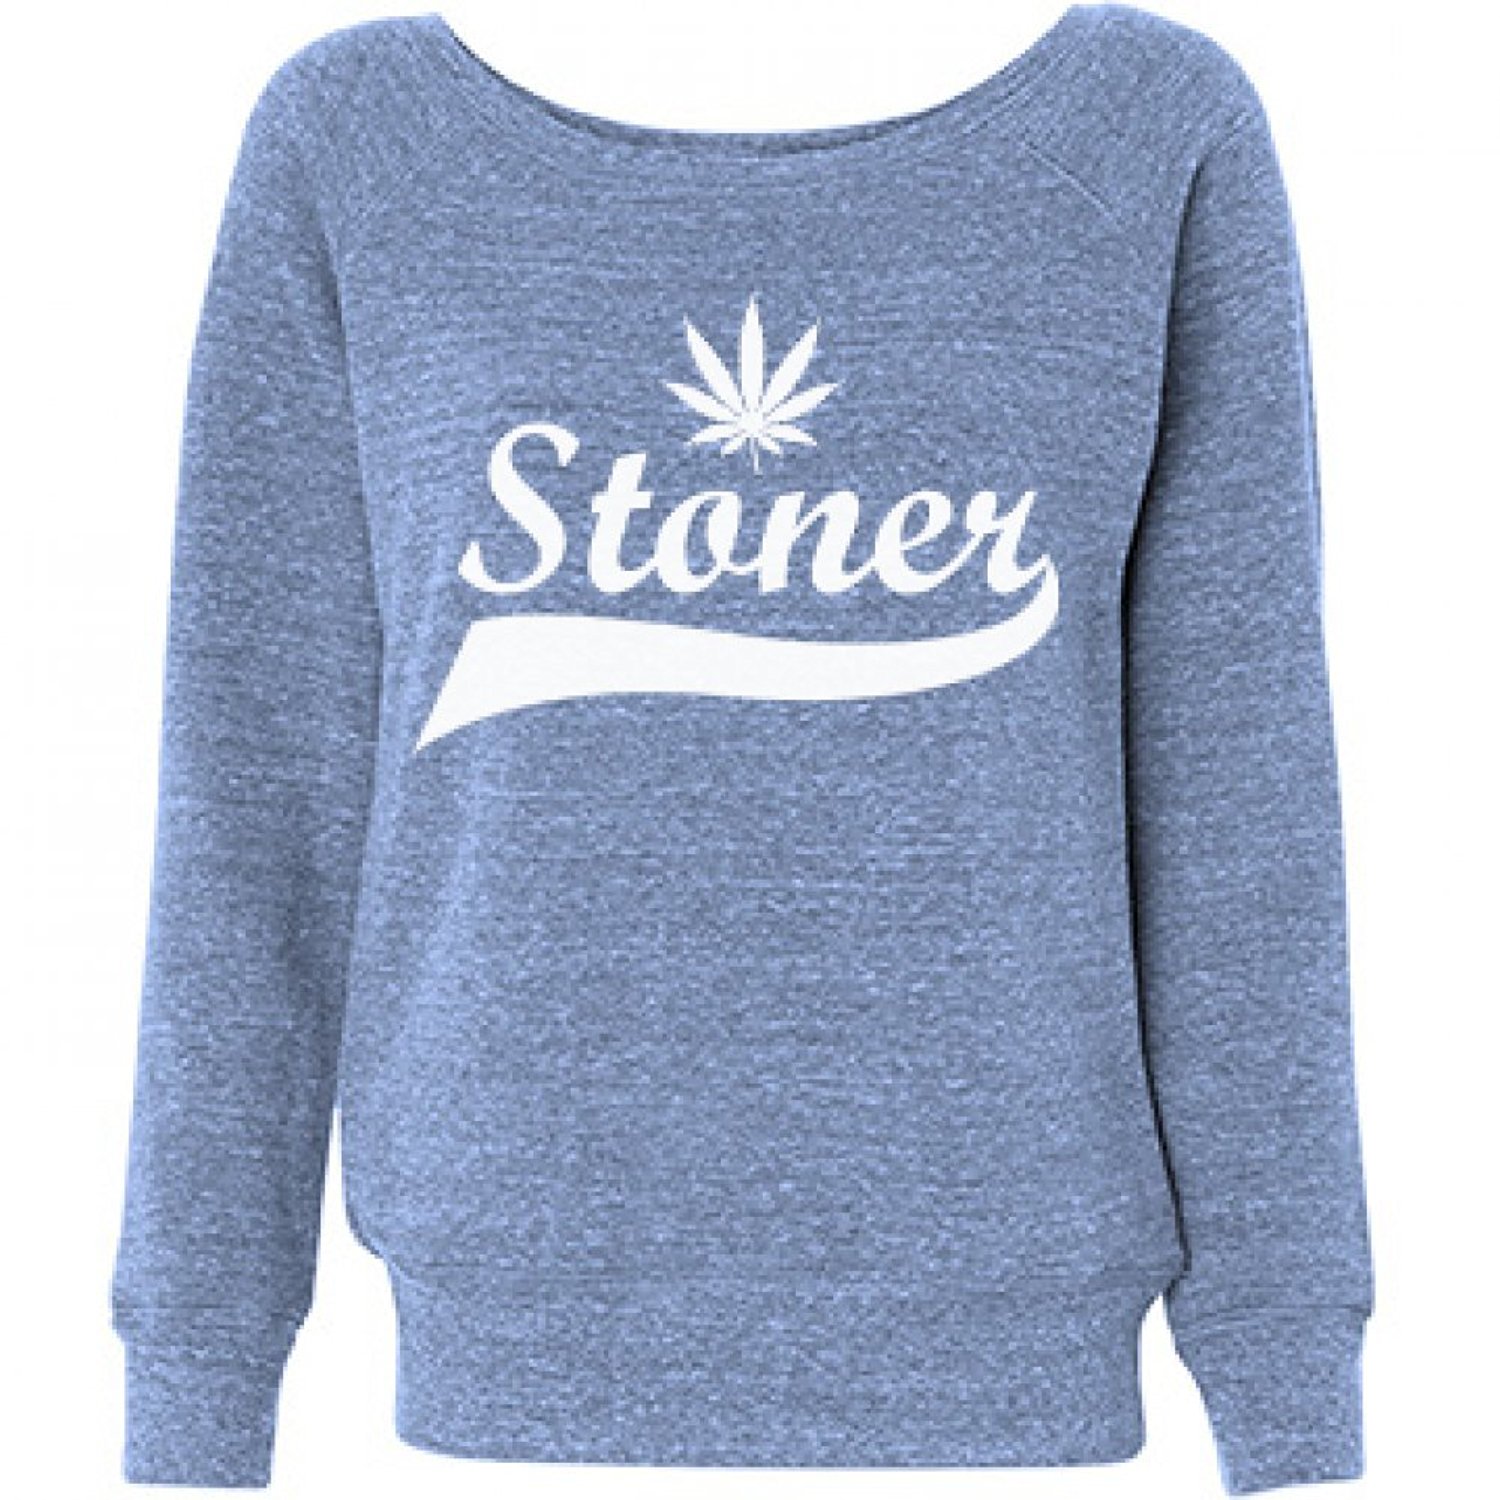 stoner sweatshirt